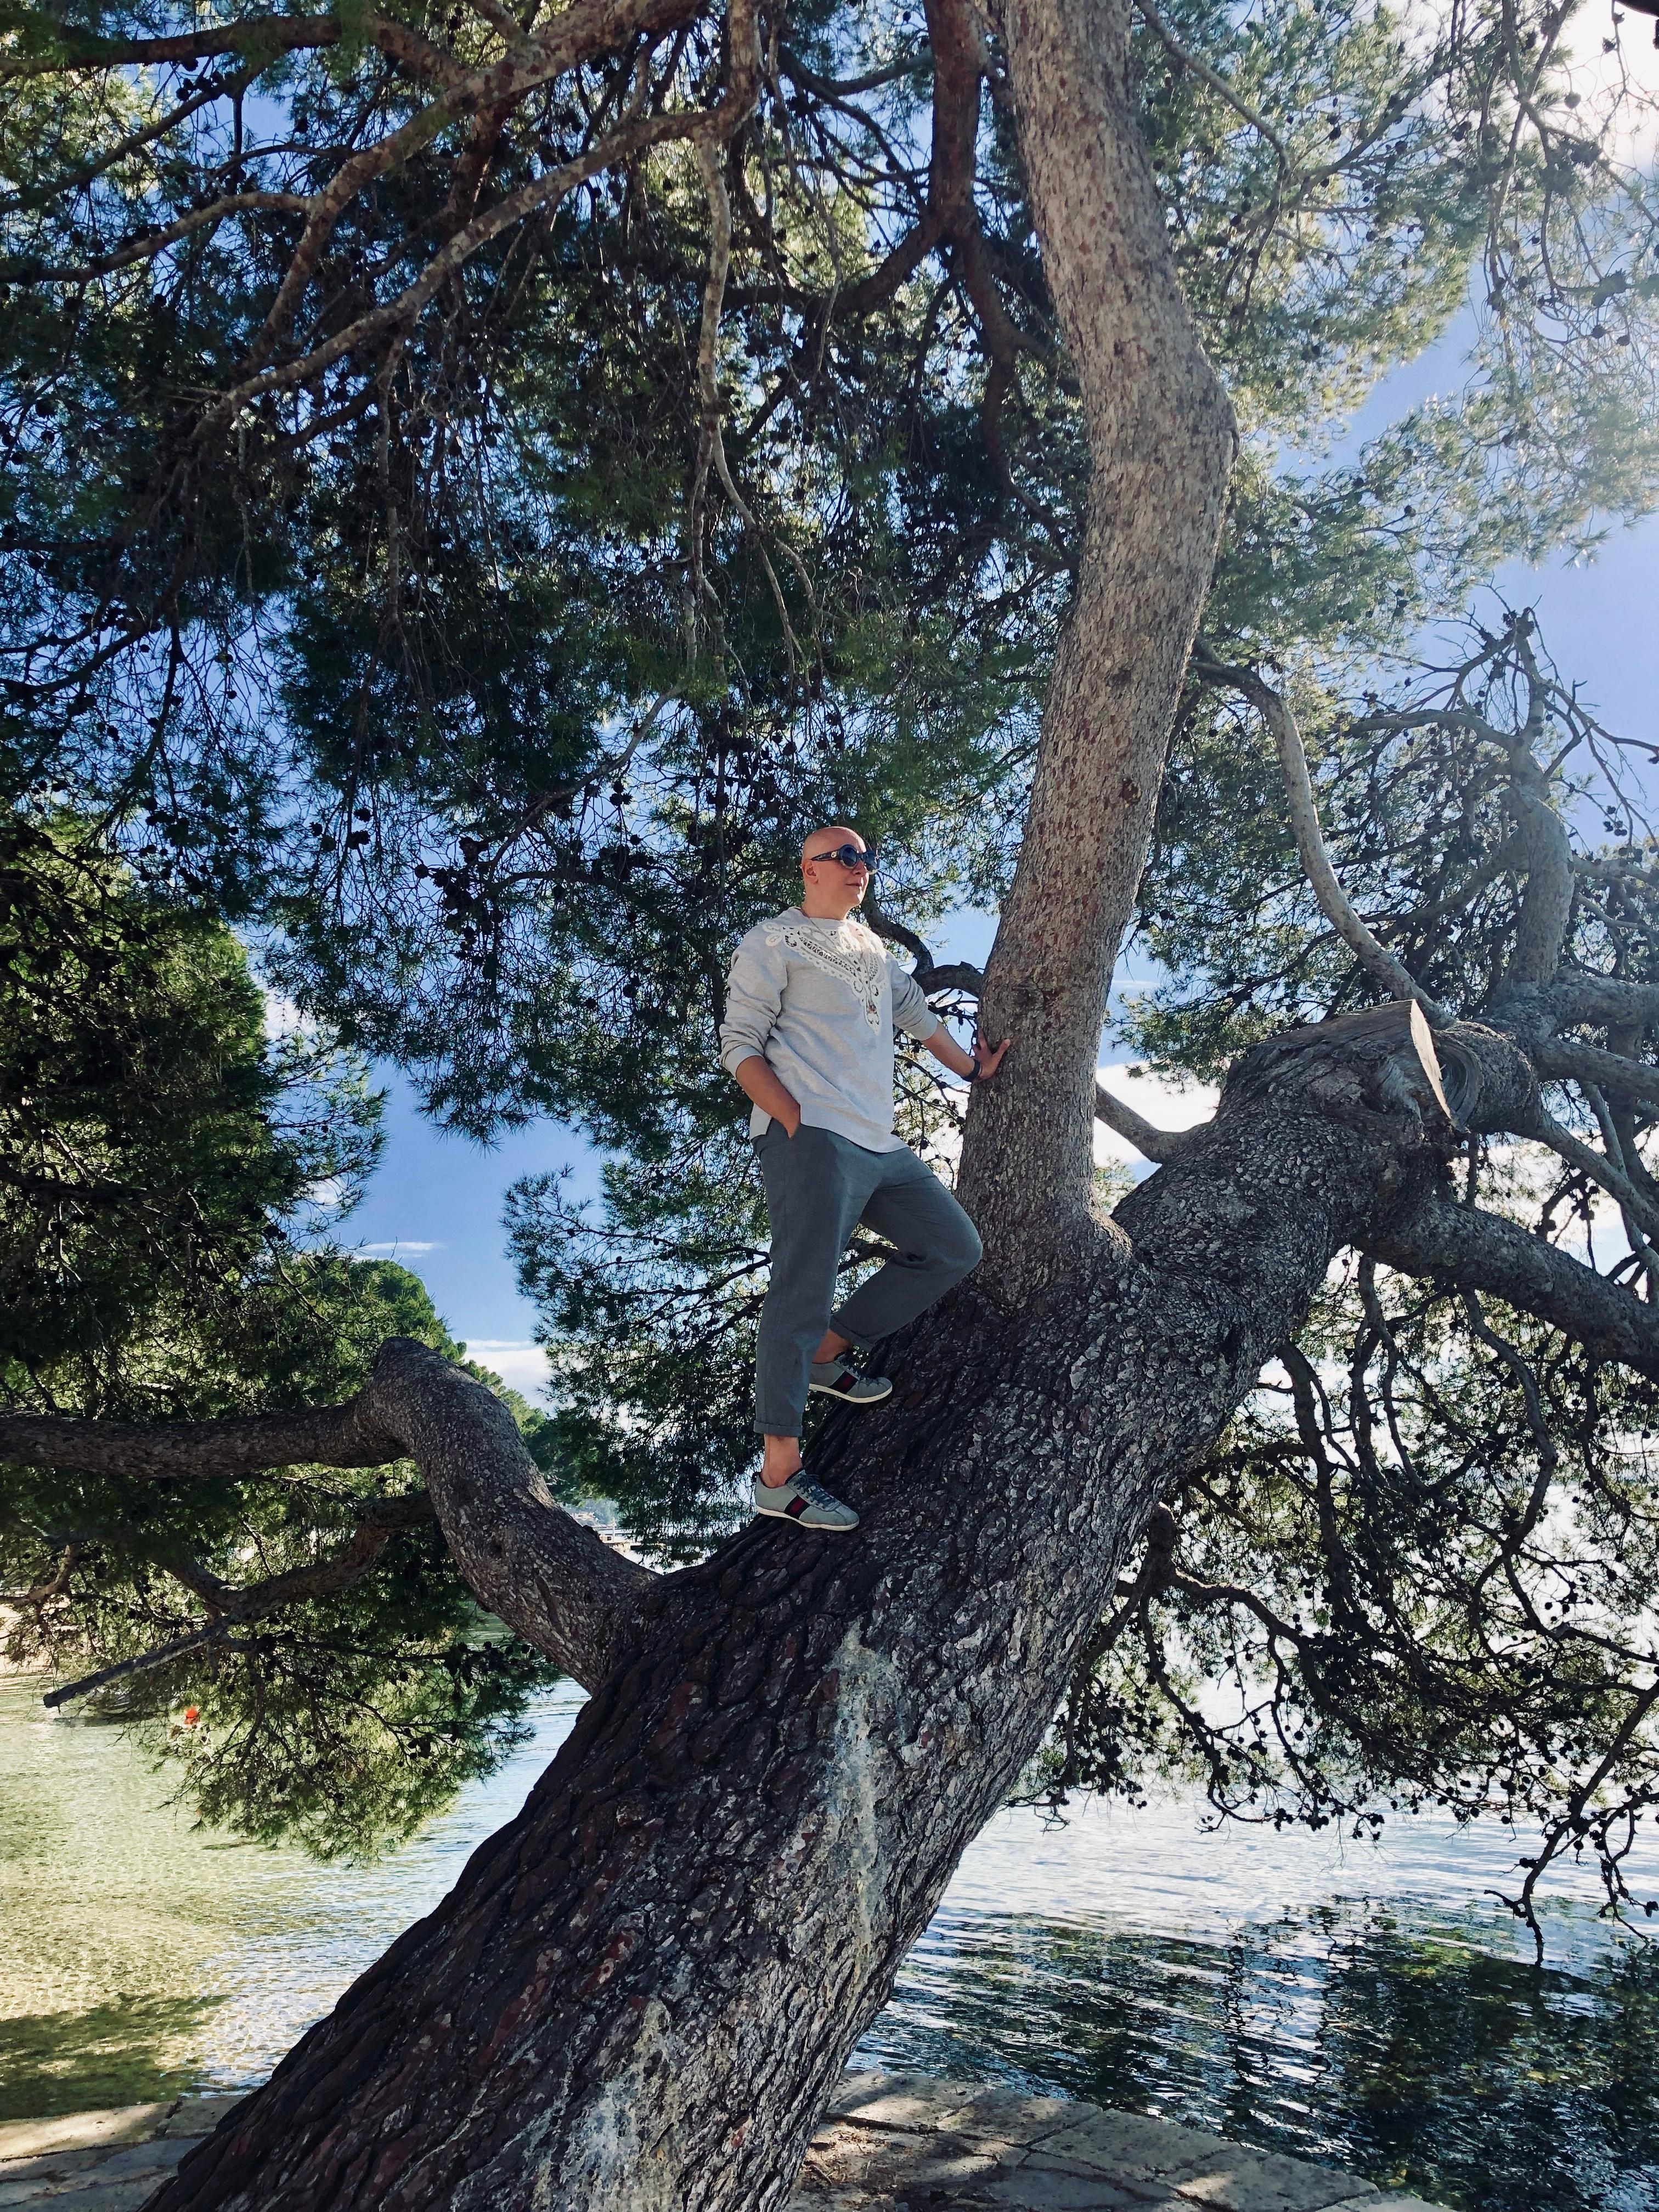 Fashionable Tree Climbing. #fashion #style #nature #travel #weekend #mallorca #sun #friends